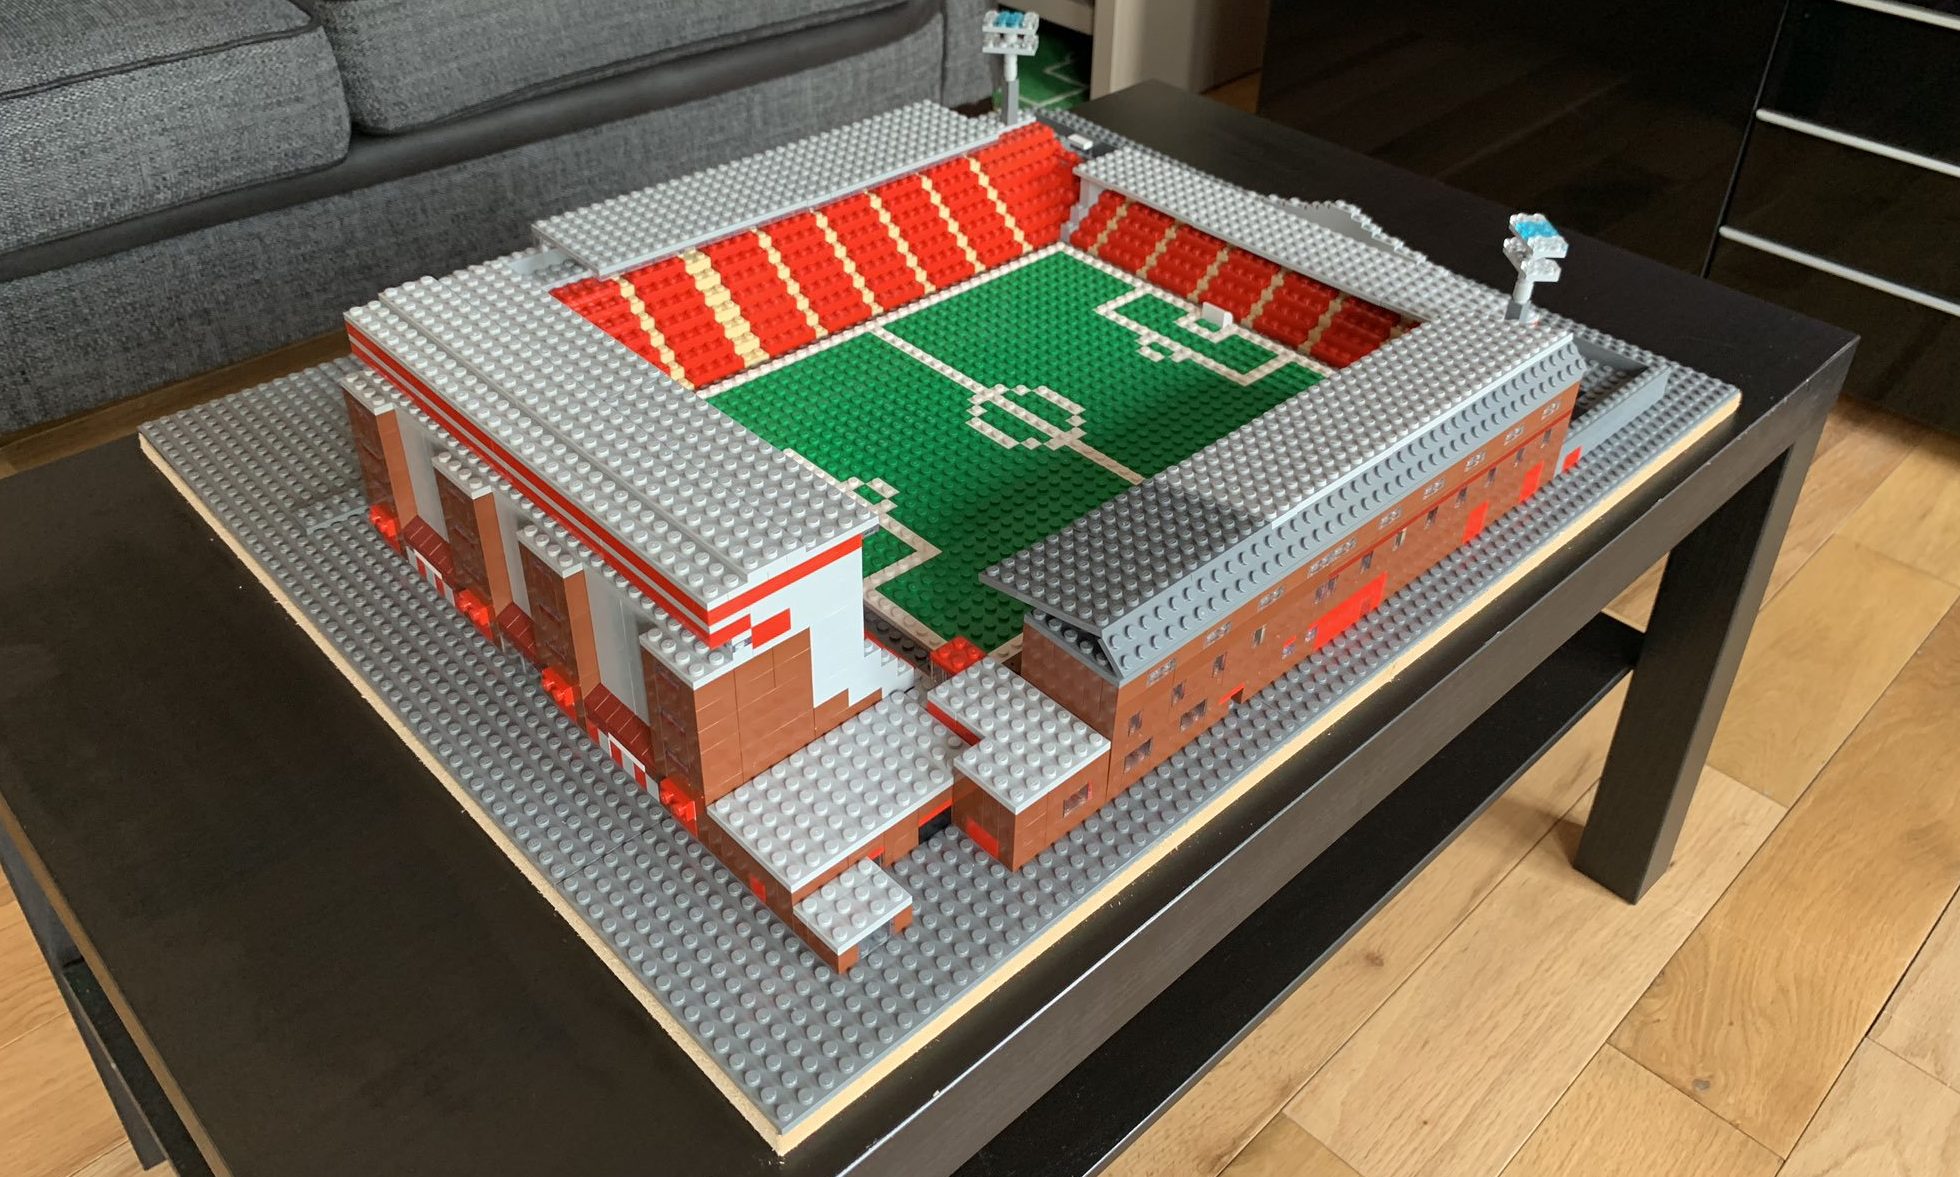 Pittodrie stadium recreated with Lego pieces.